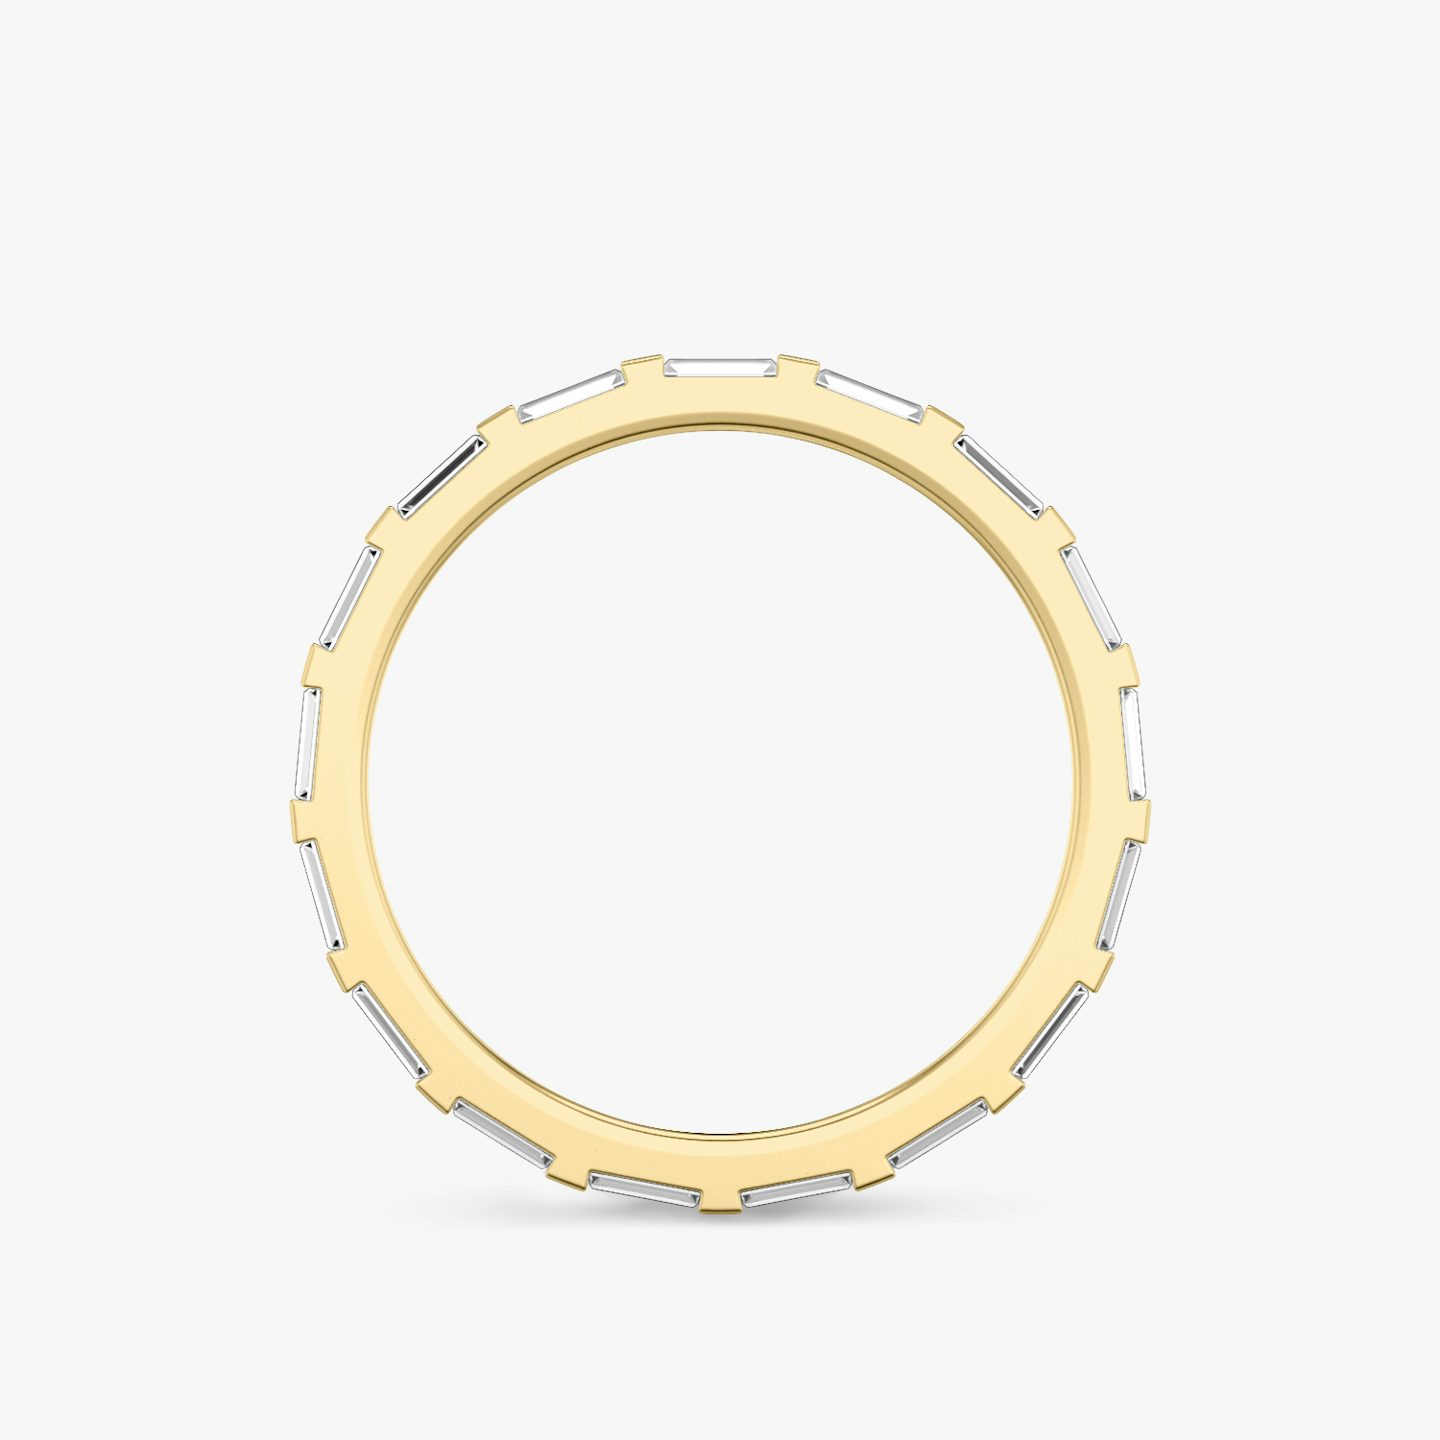 El Anillo Baguette Bar | Baguette | 18k | Oro amarillo de 18 quilates | Estilo del anillo: Diamantes alrededor